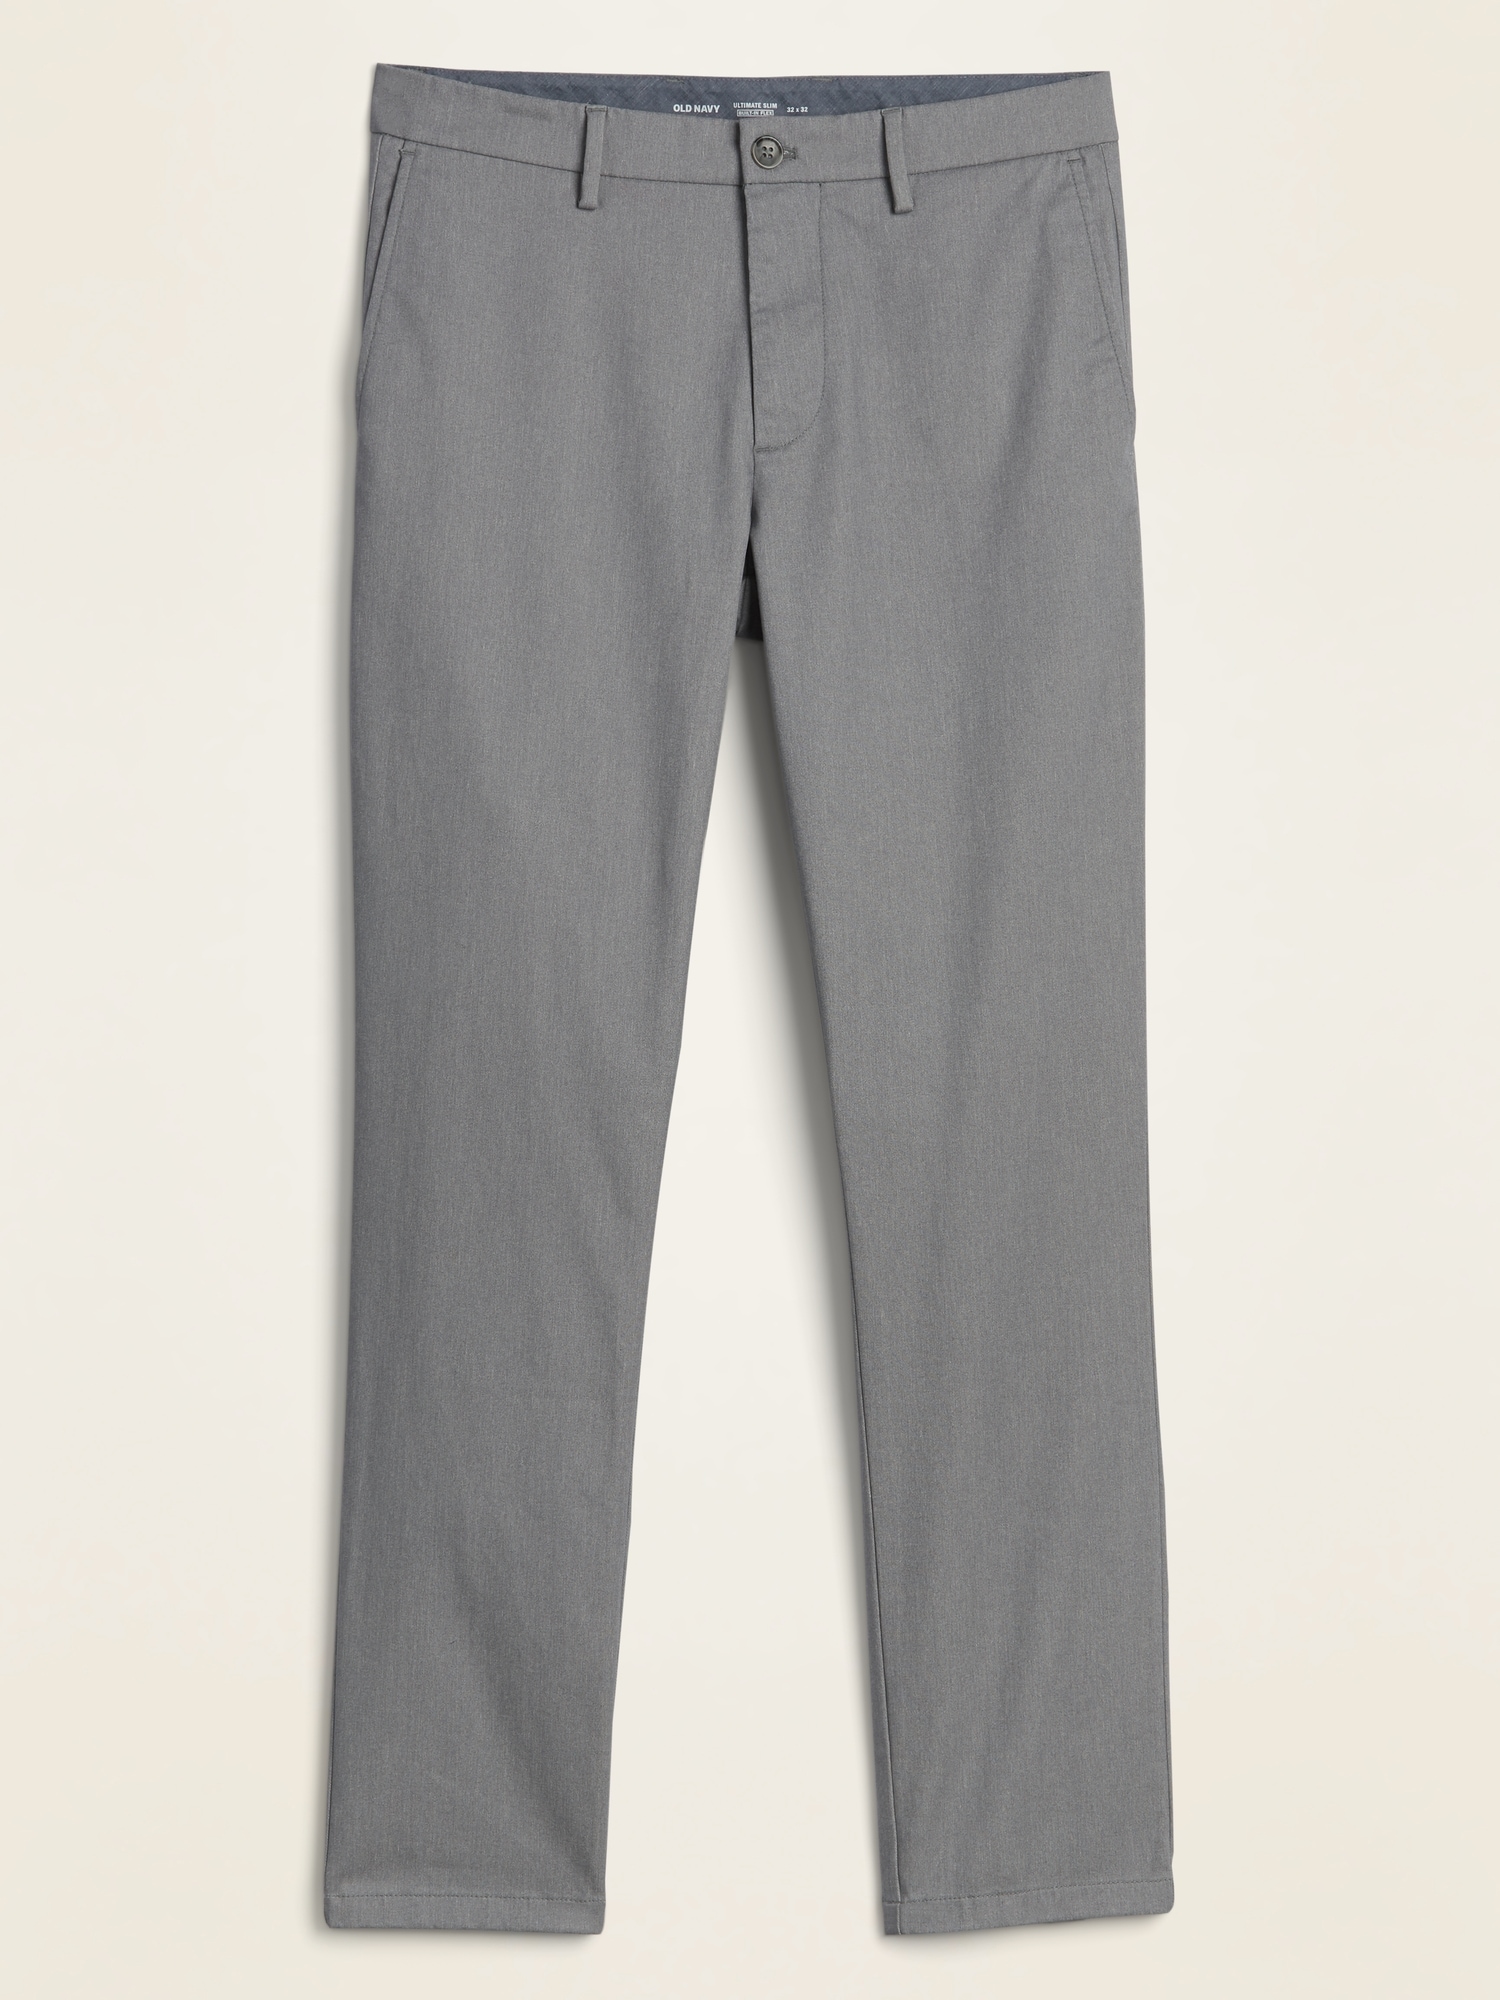 Chinos men's marl linen slim pants | Quality brand Europann